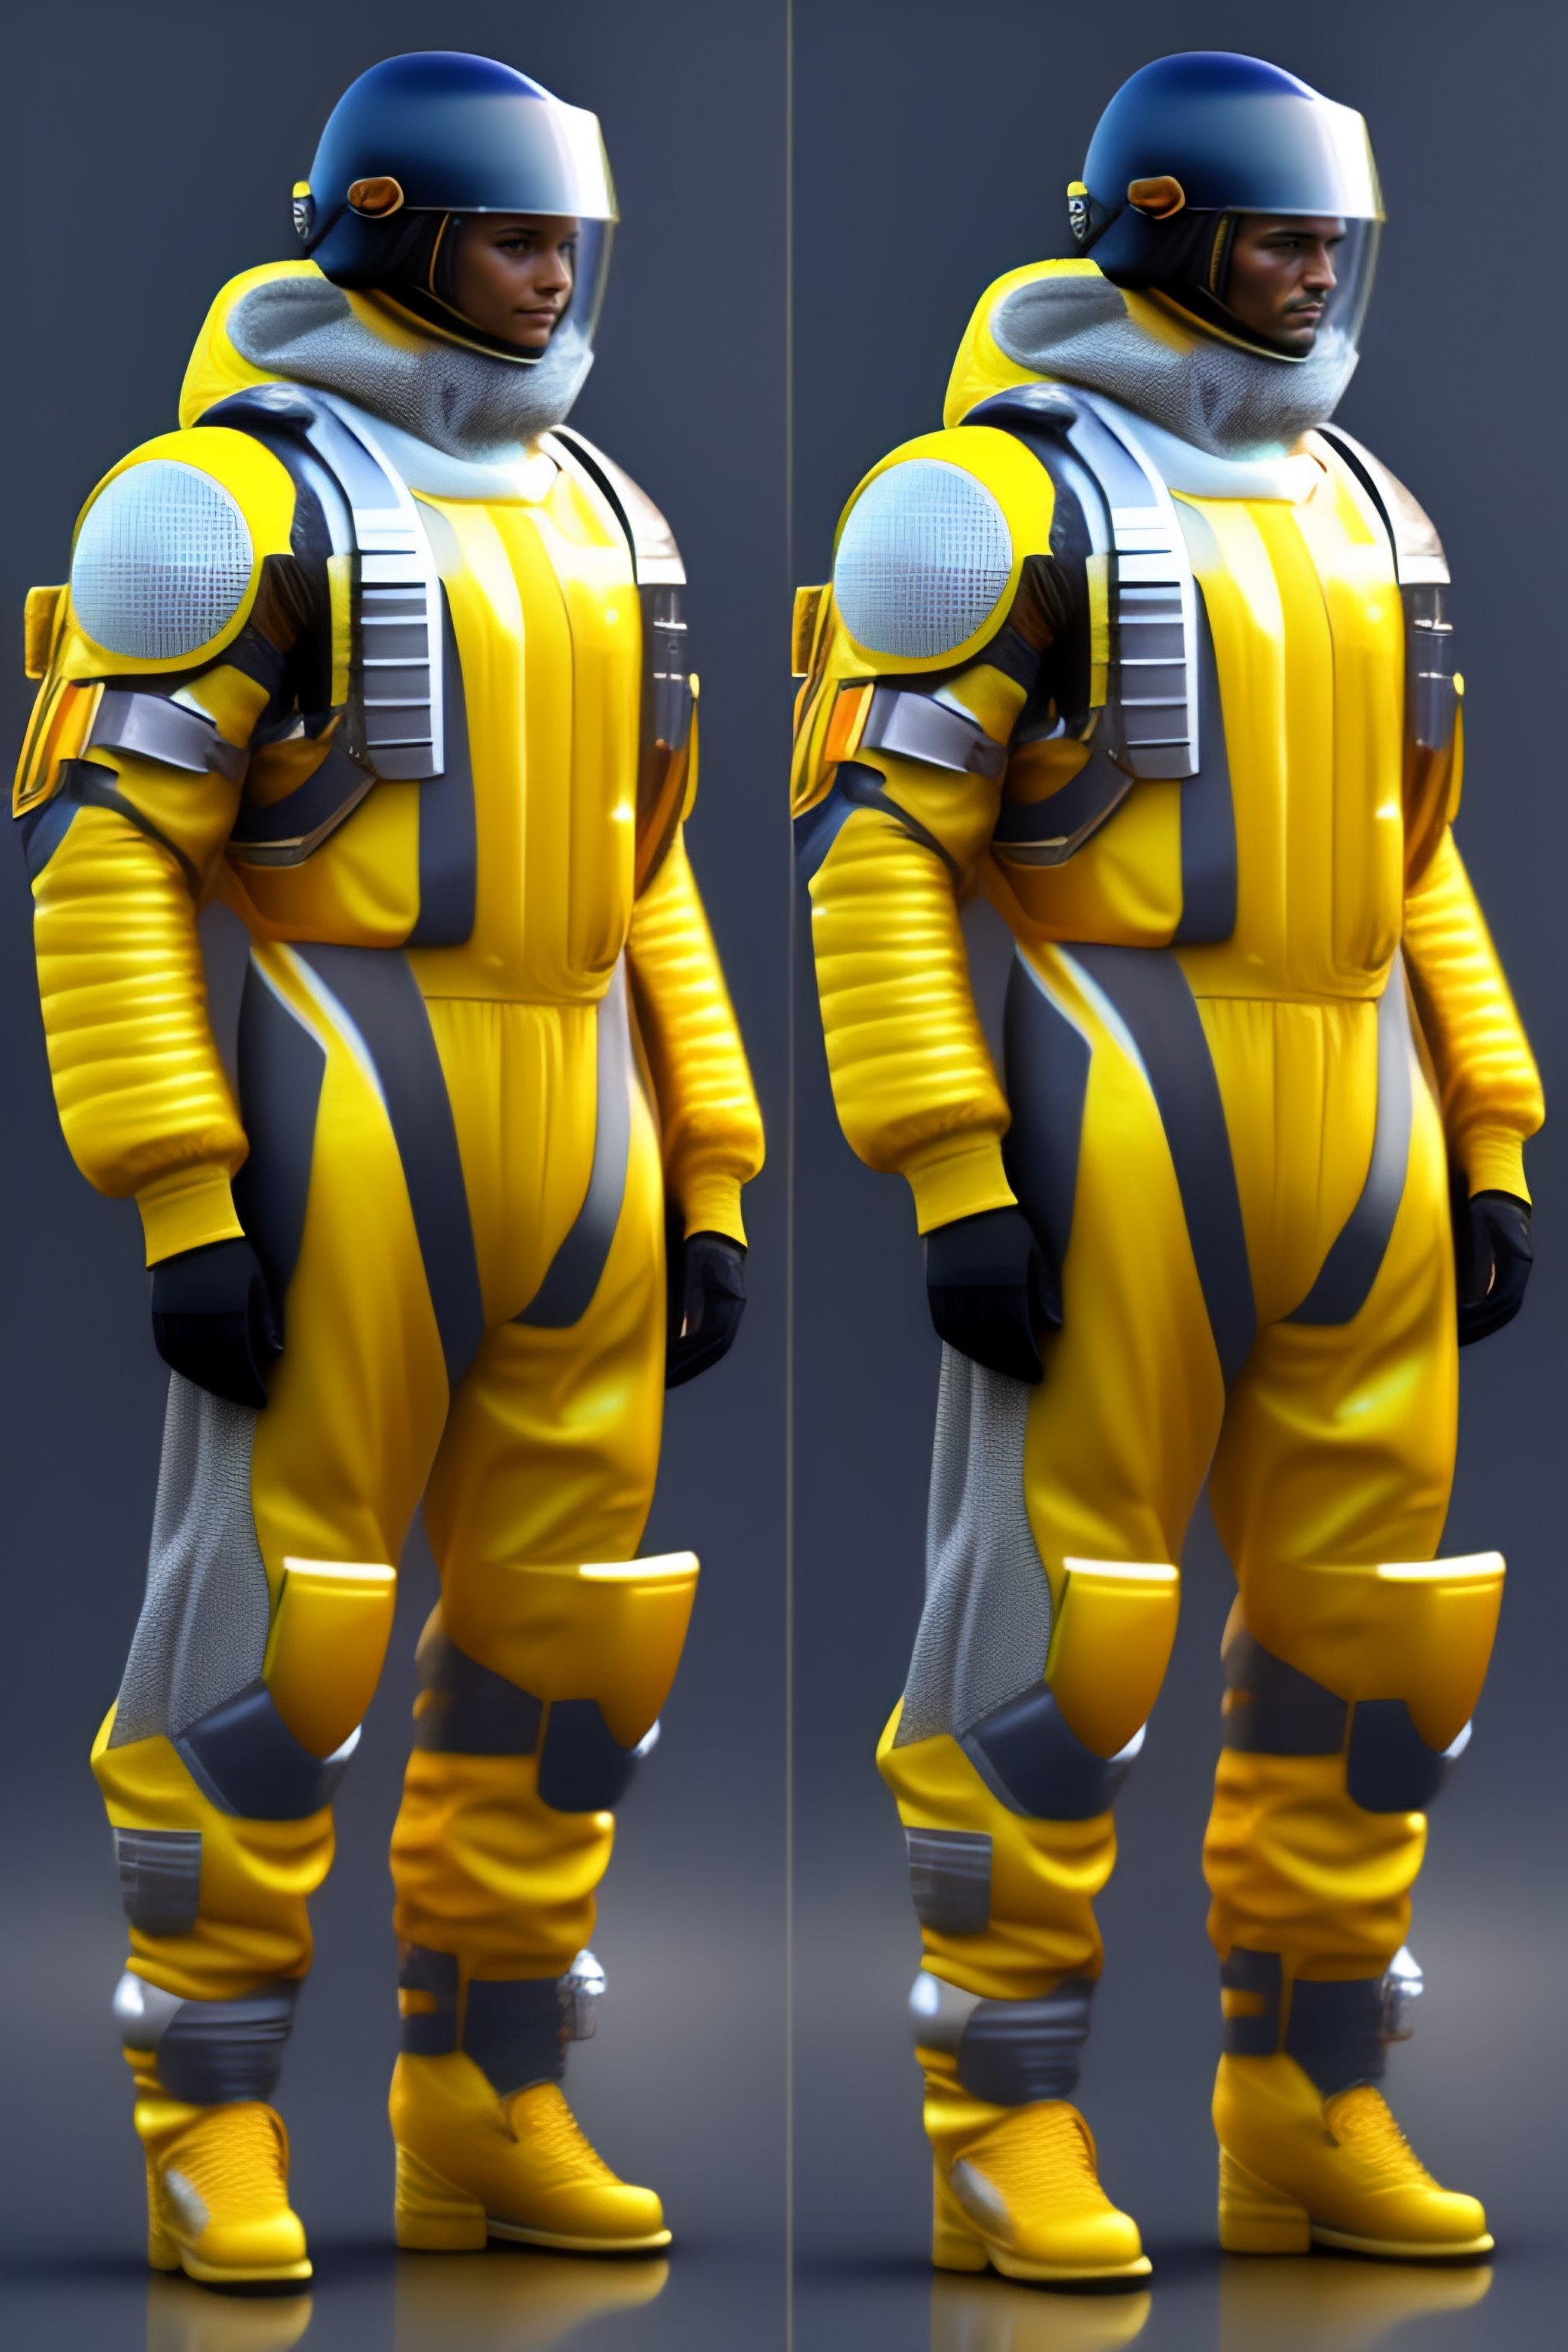 Lexica - futuristic shapes that will define his costume